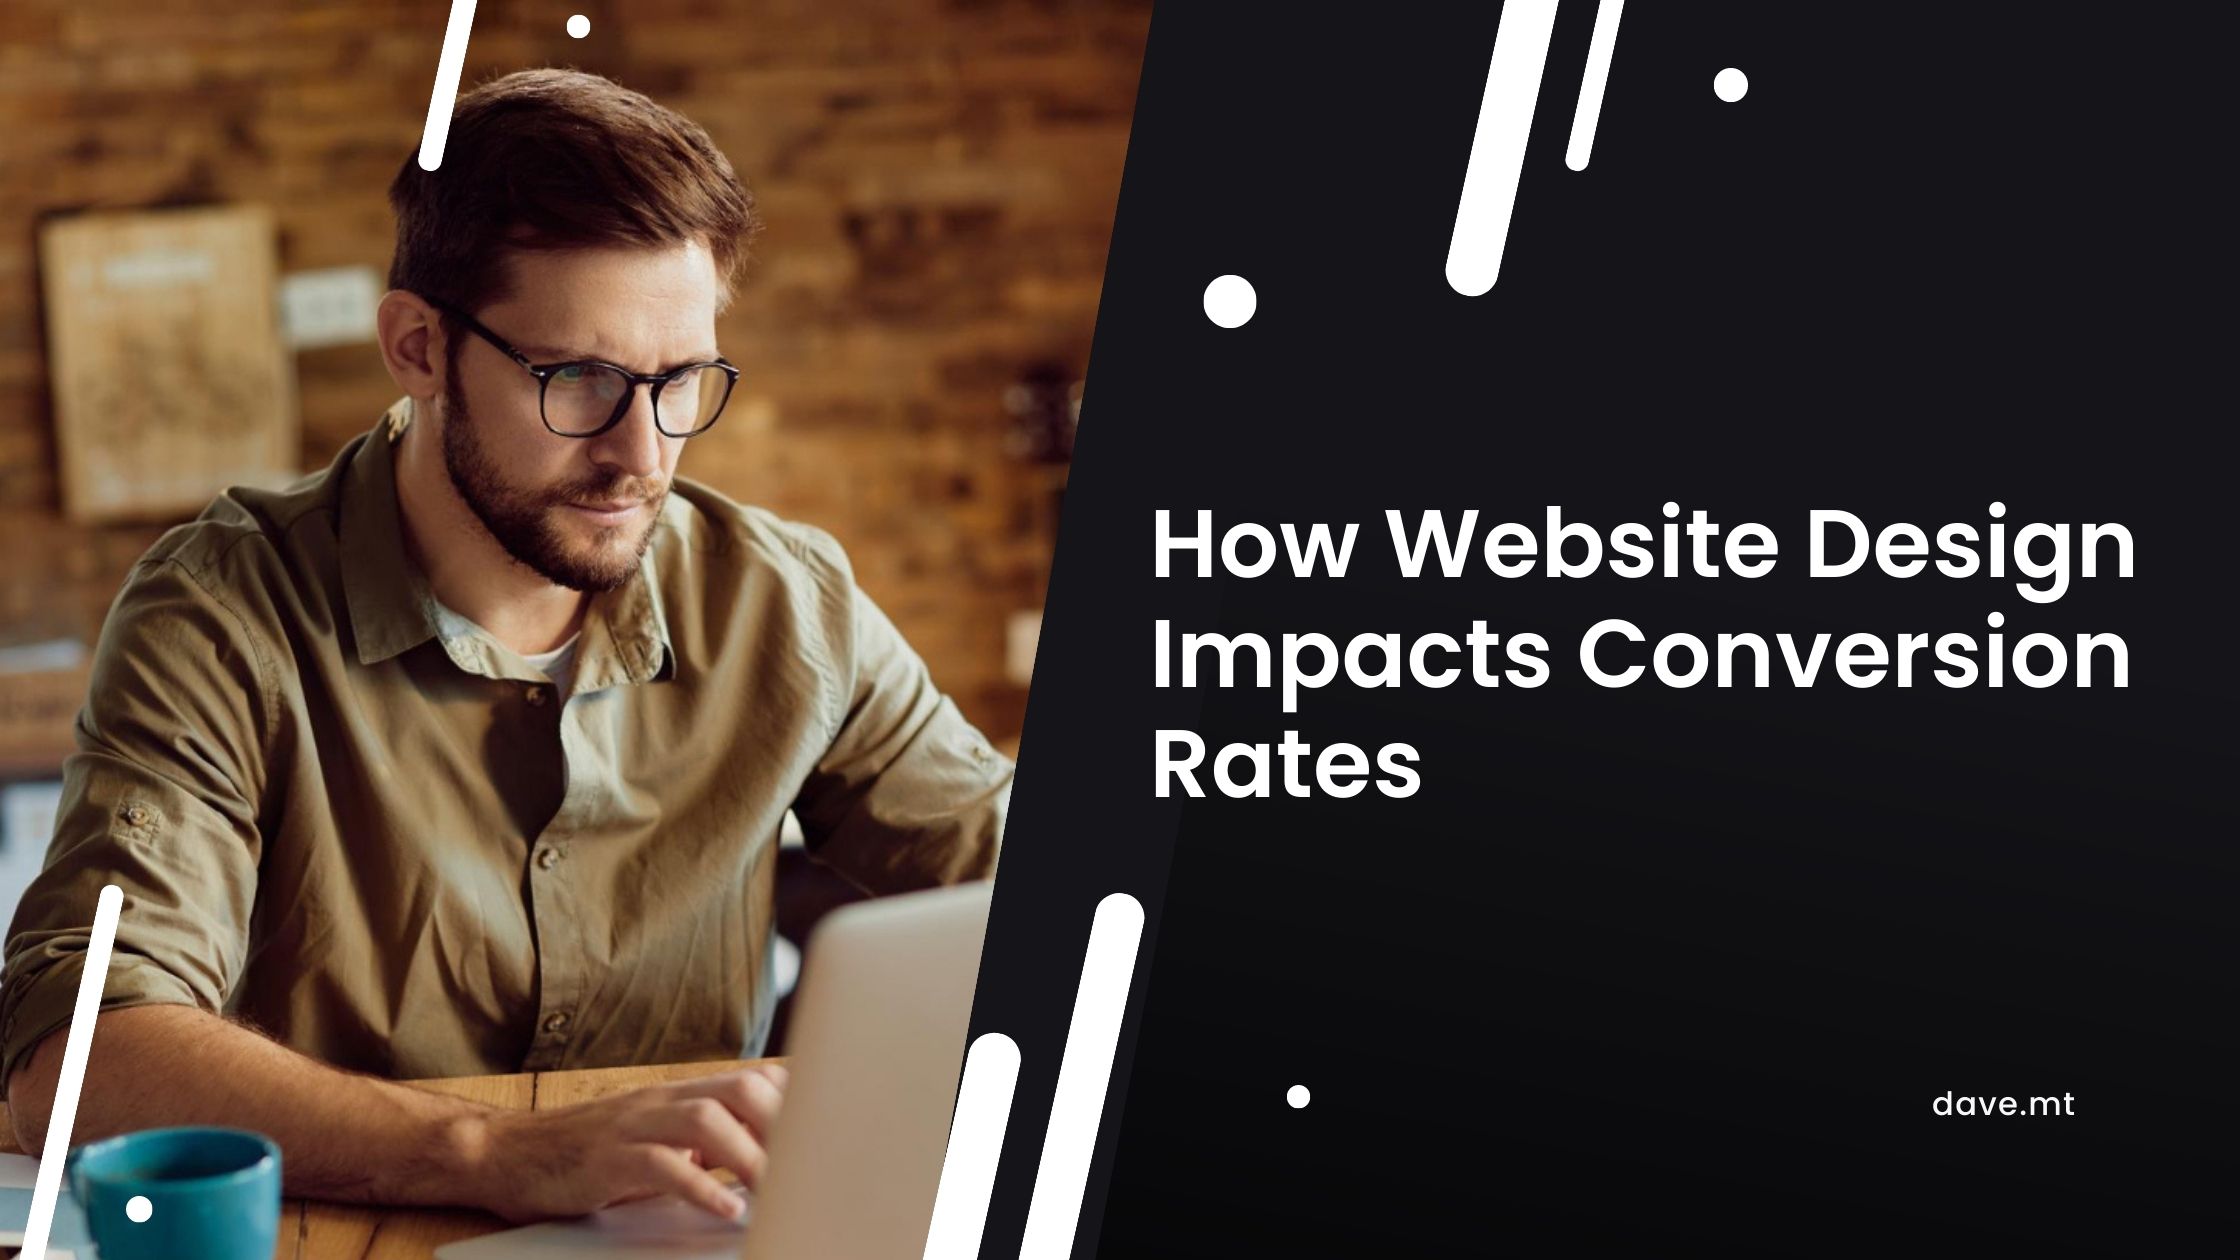 Web design impacts conversions